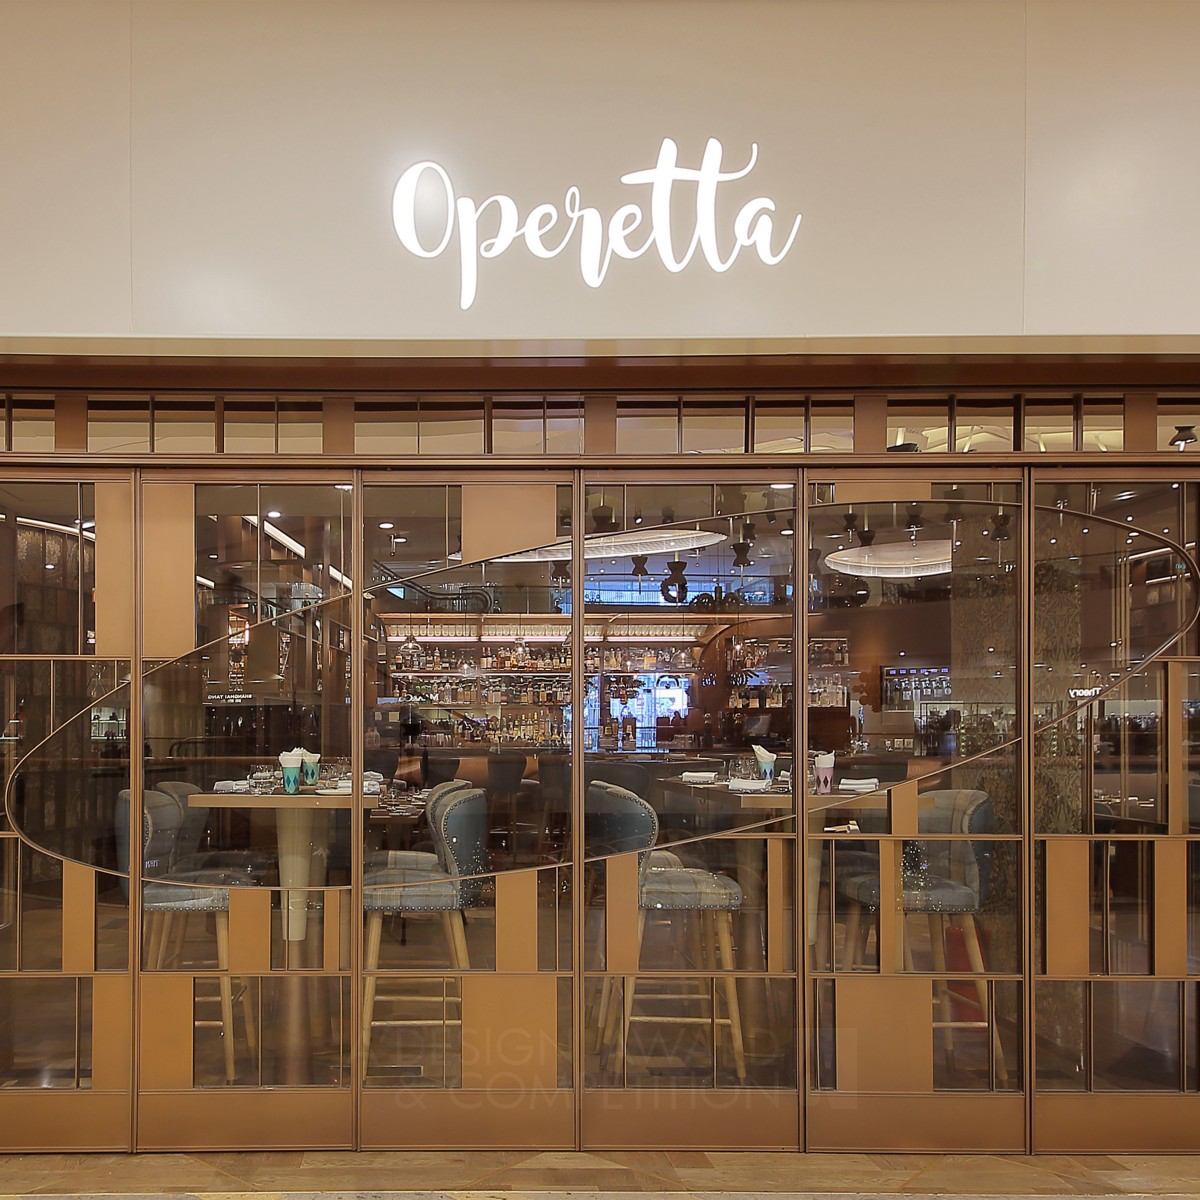 Operetta Restaurant